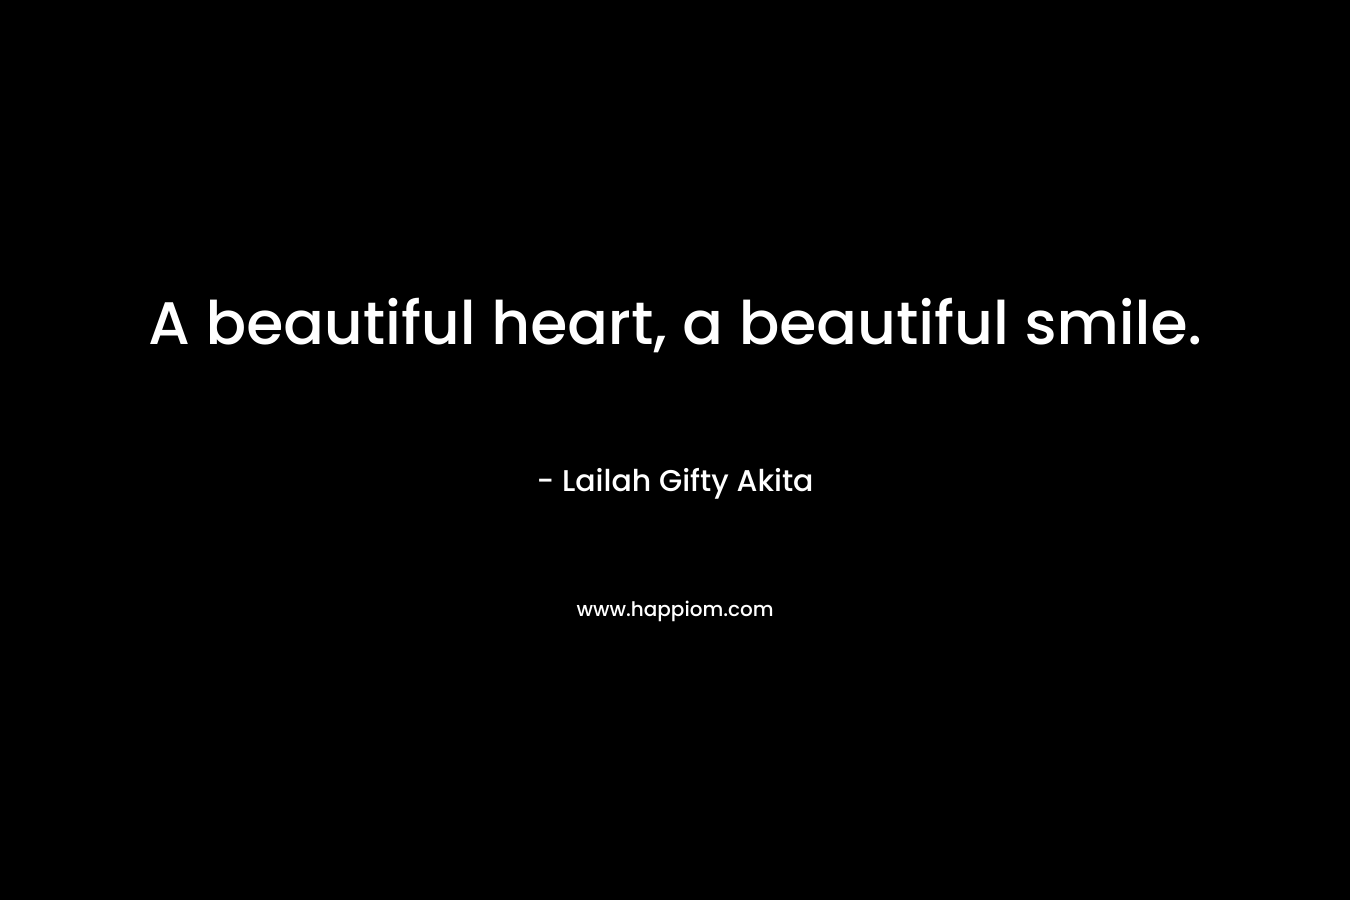 A beautiful heart, a beautiful smile.